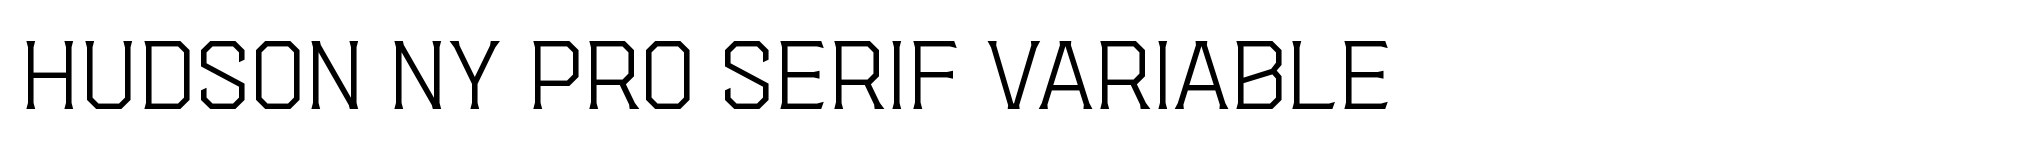 Hudson NY Pro Serif Variable image